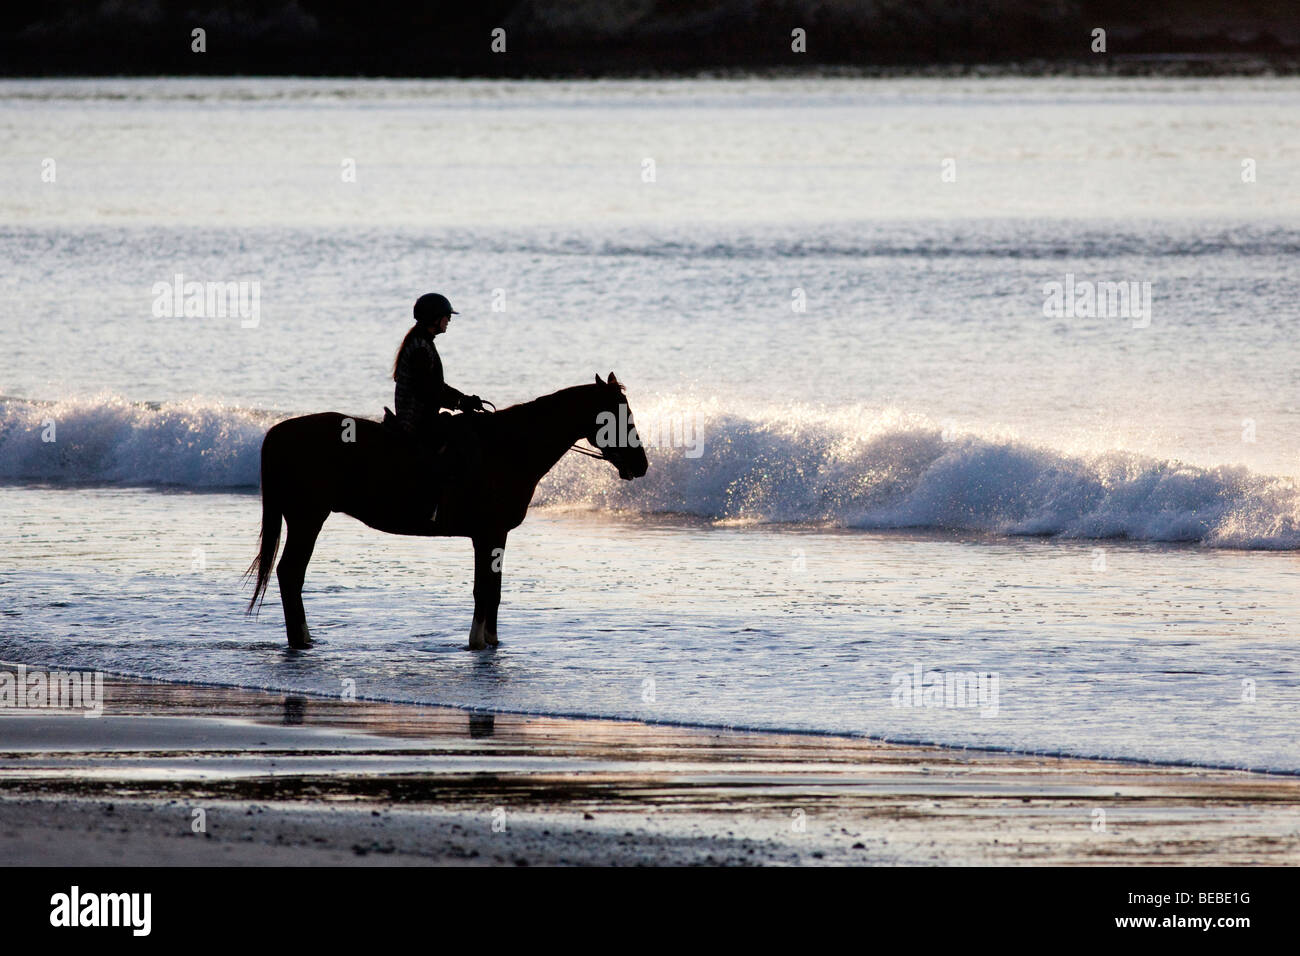 A horse rider on a beach on Waiheke Island (New Zealand) Stock Photo